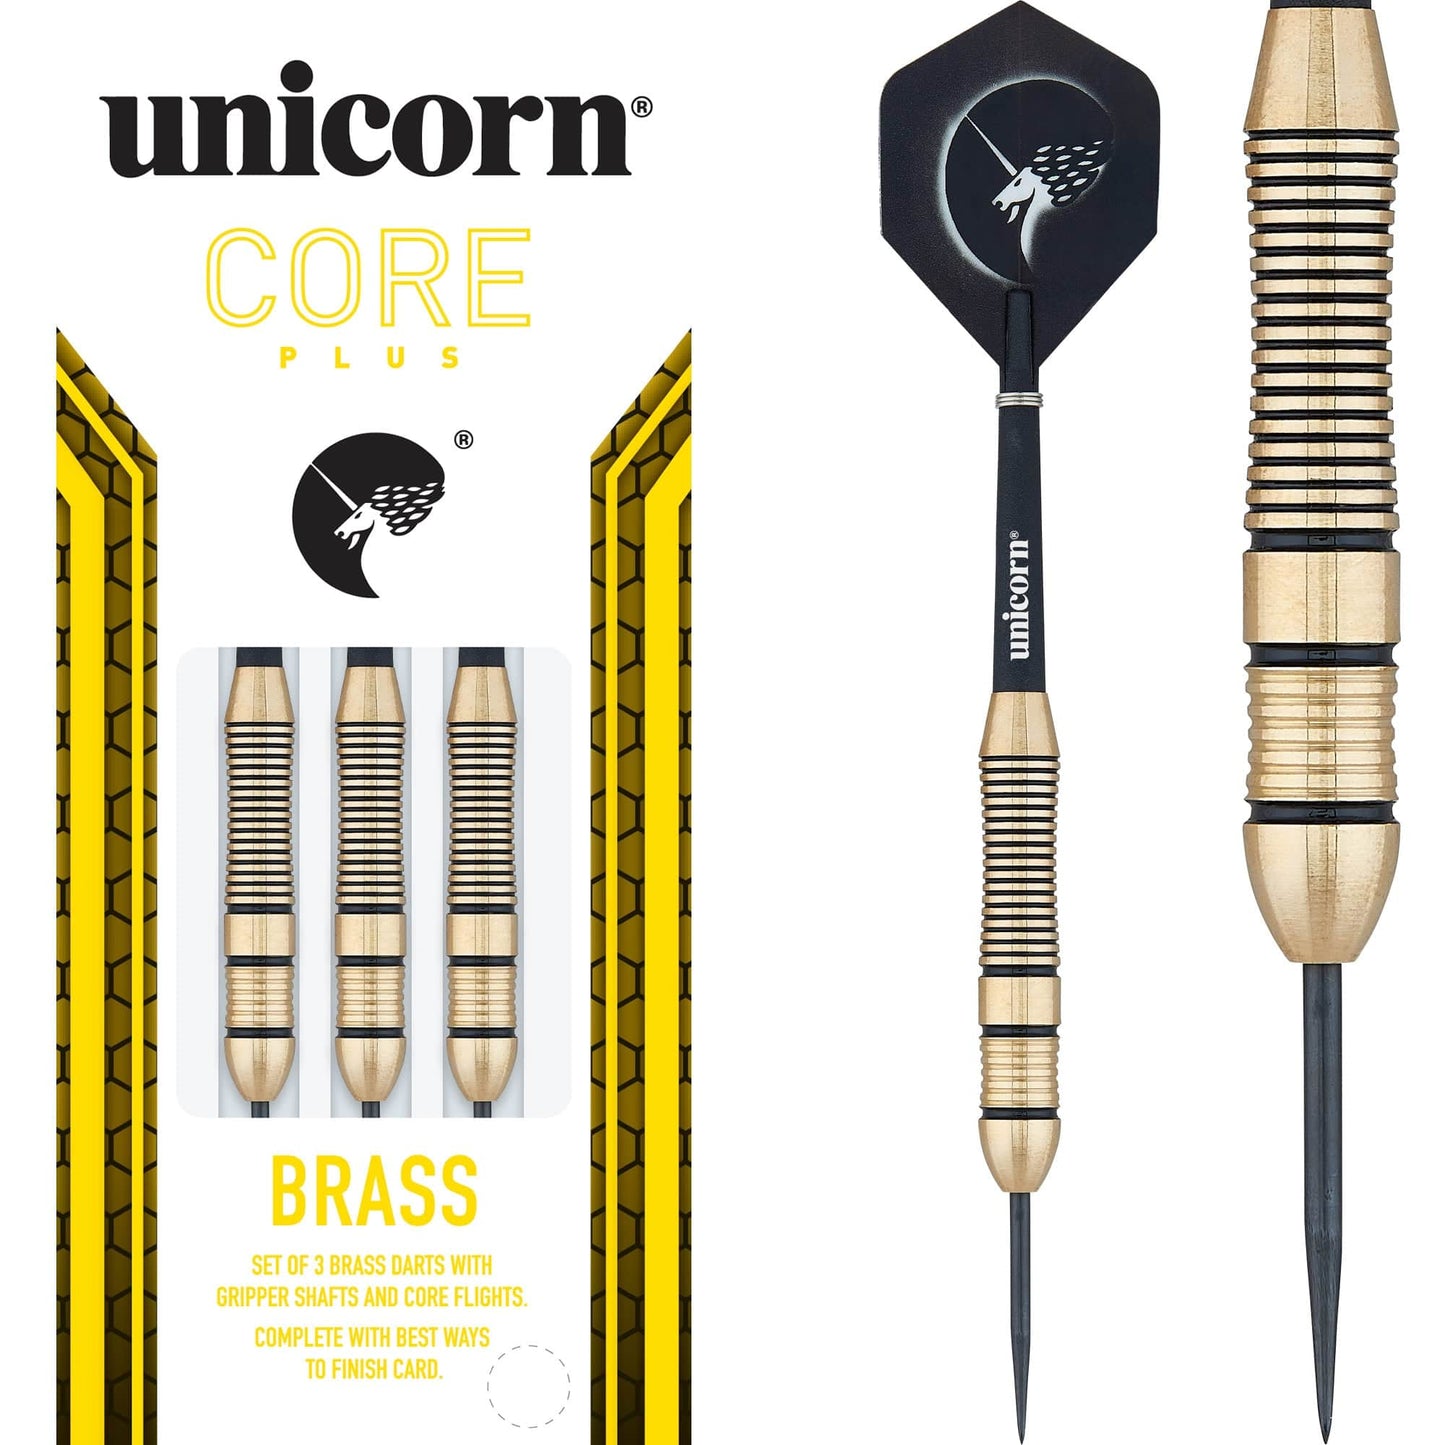 Unicorn Core Plus Win Darts - Steel Tip Brass - Style 1 - Scallop 22g